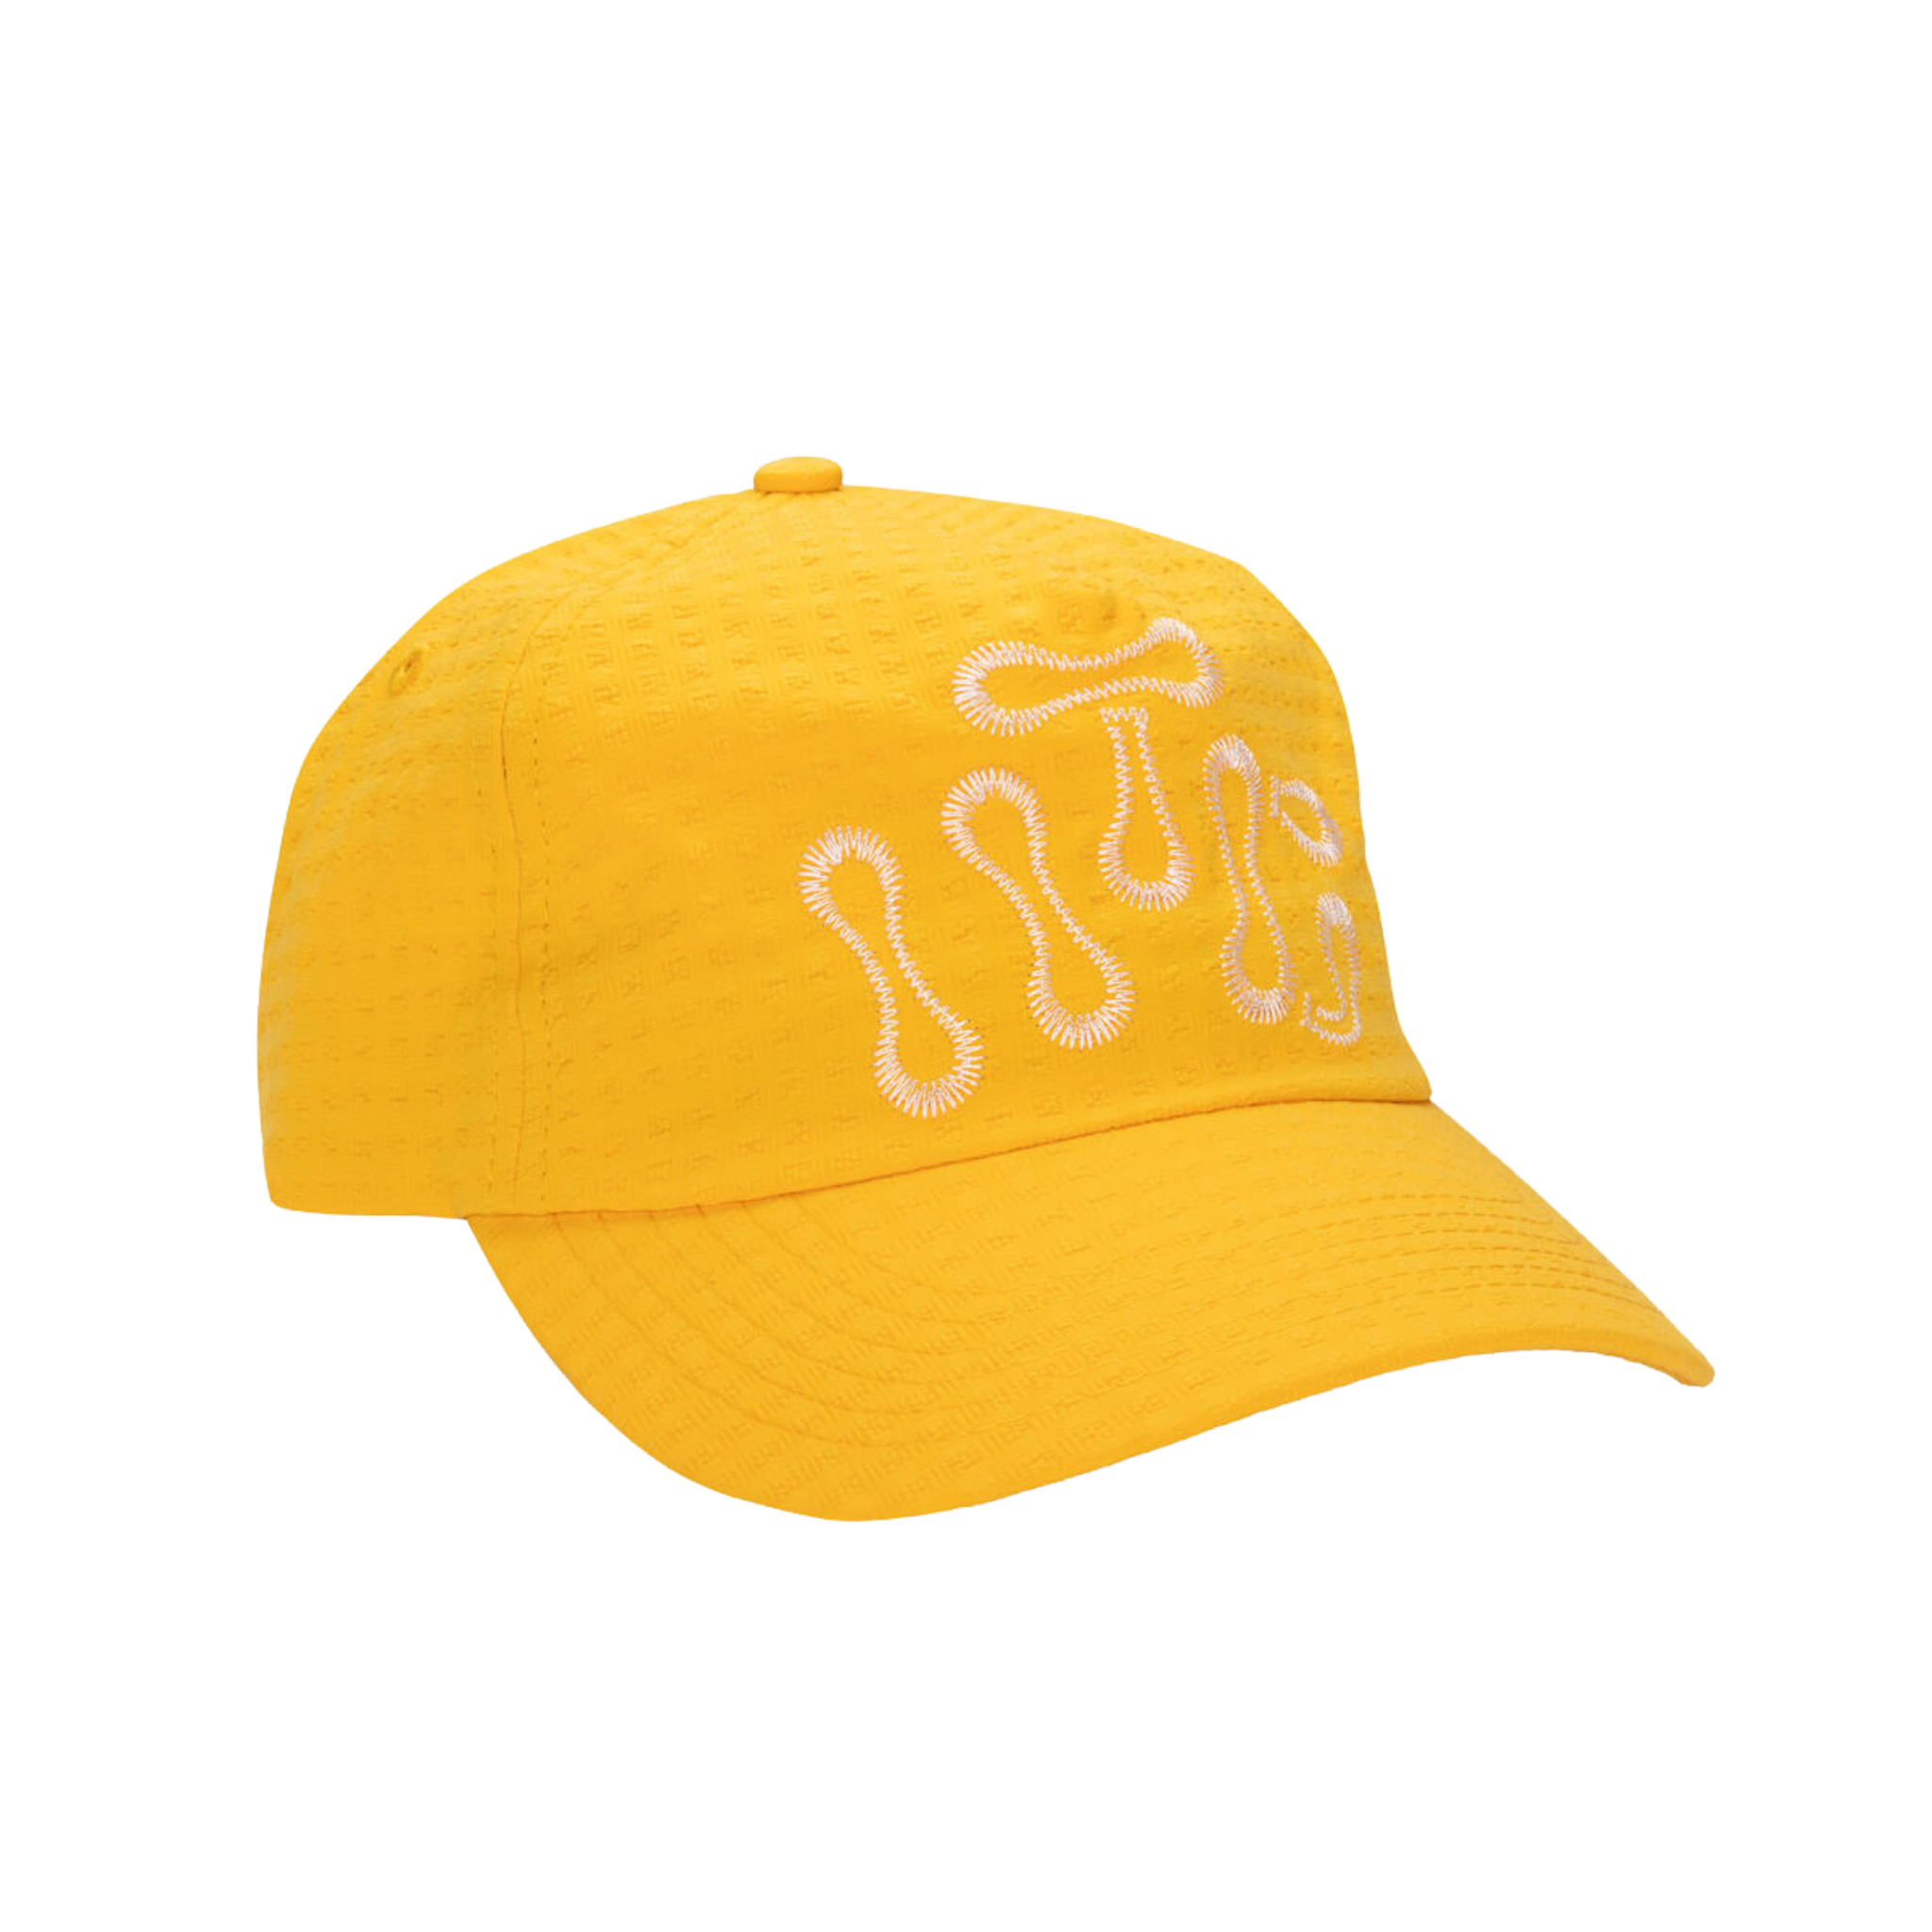 Honor The Gift Seeksucker Cap (Yellow) - Honor The Gift